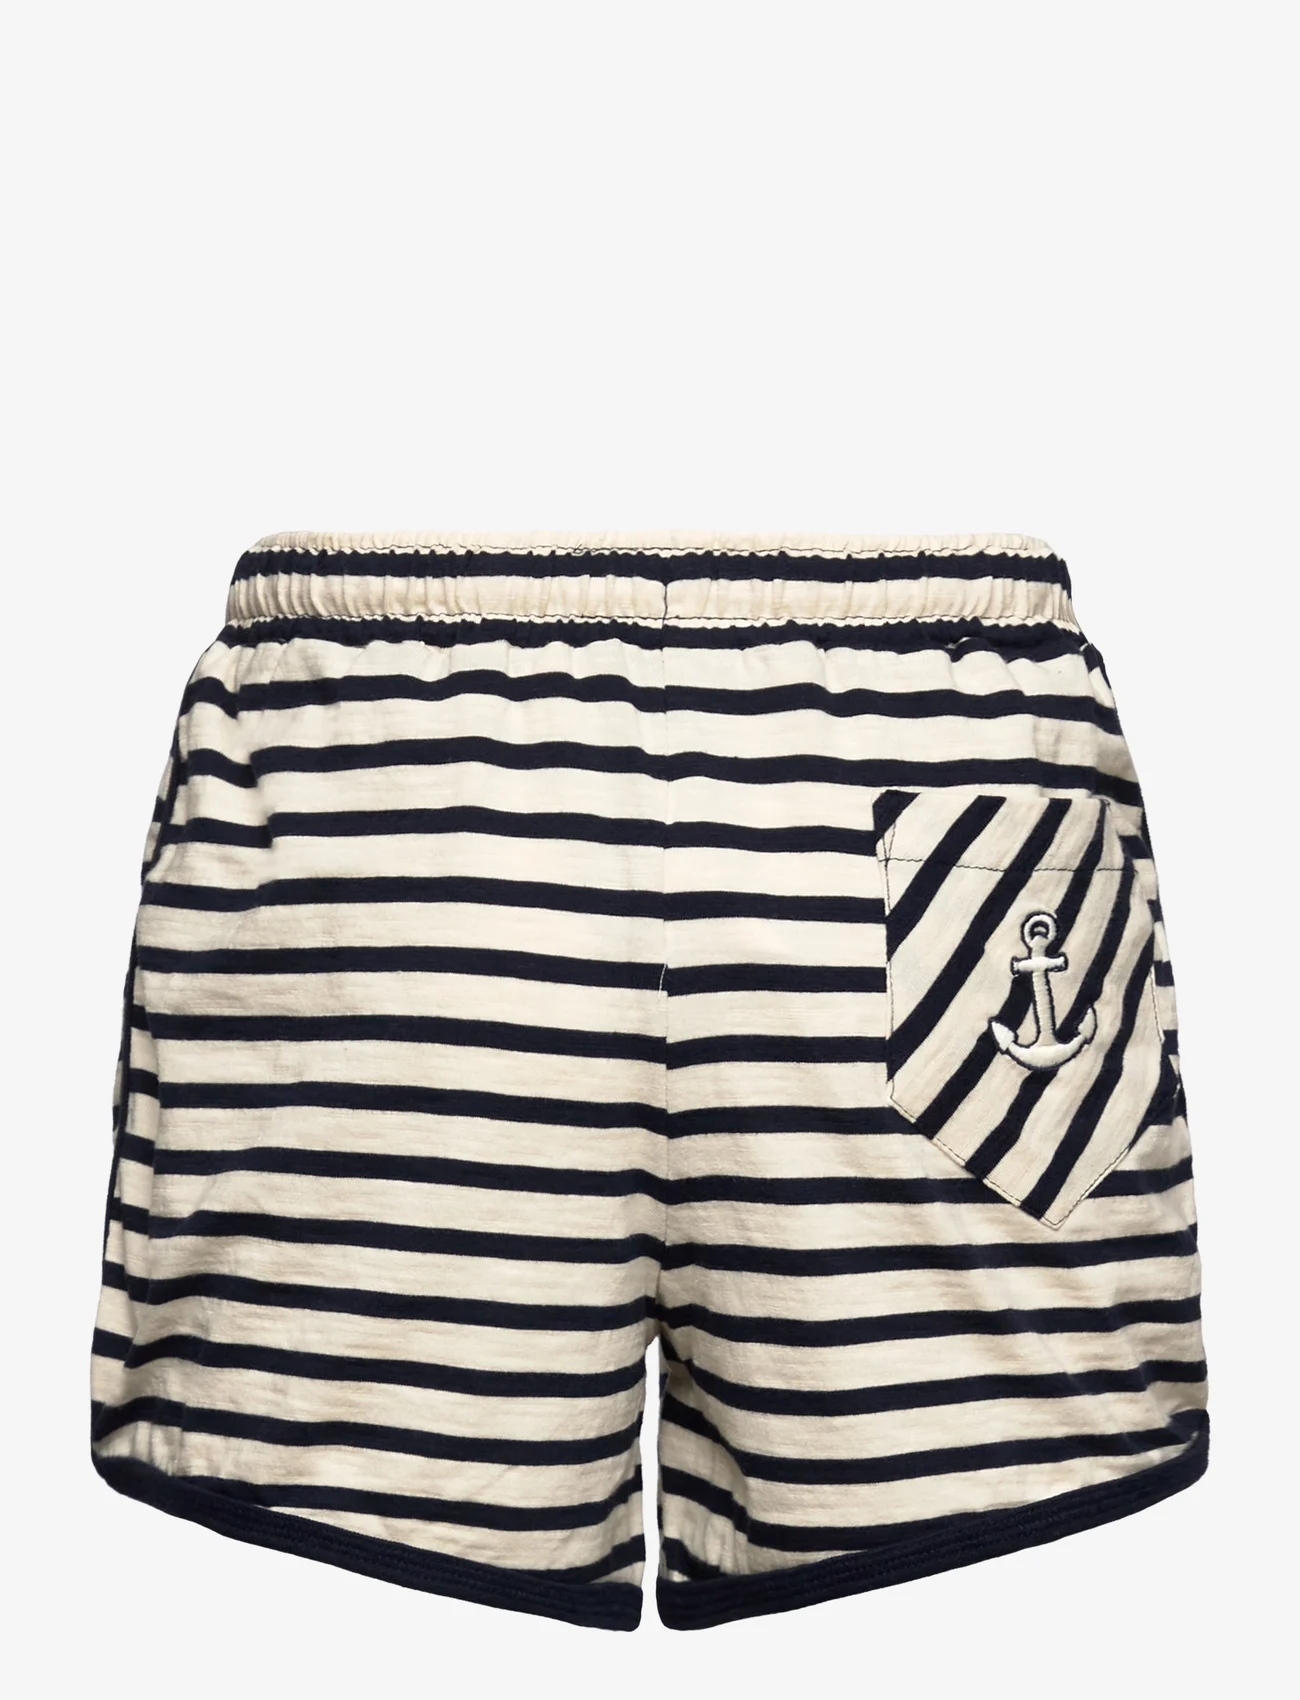 ebbe Kids - Sofia shorts - sweat shorts - offwhite stripe - 1